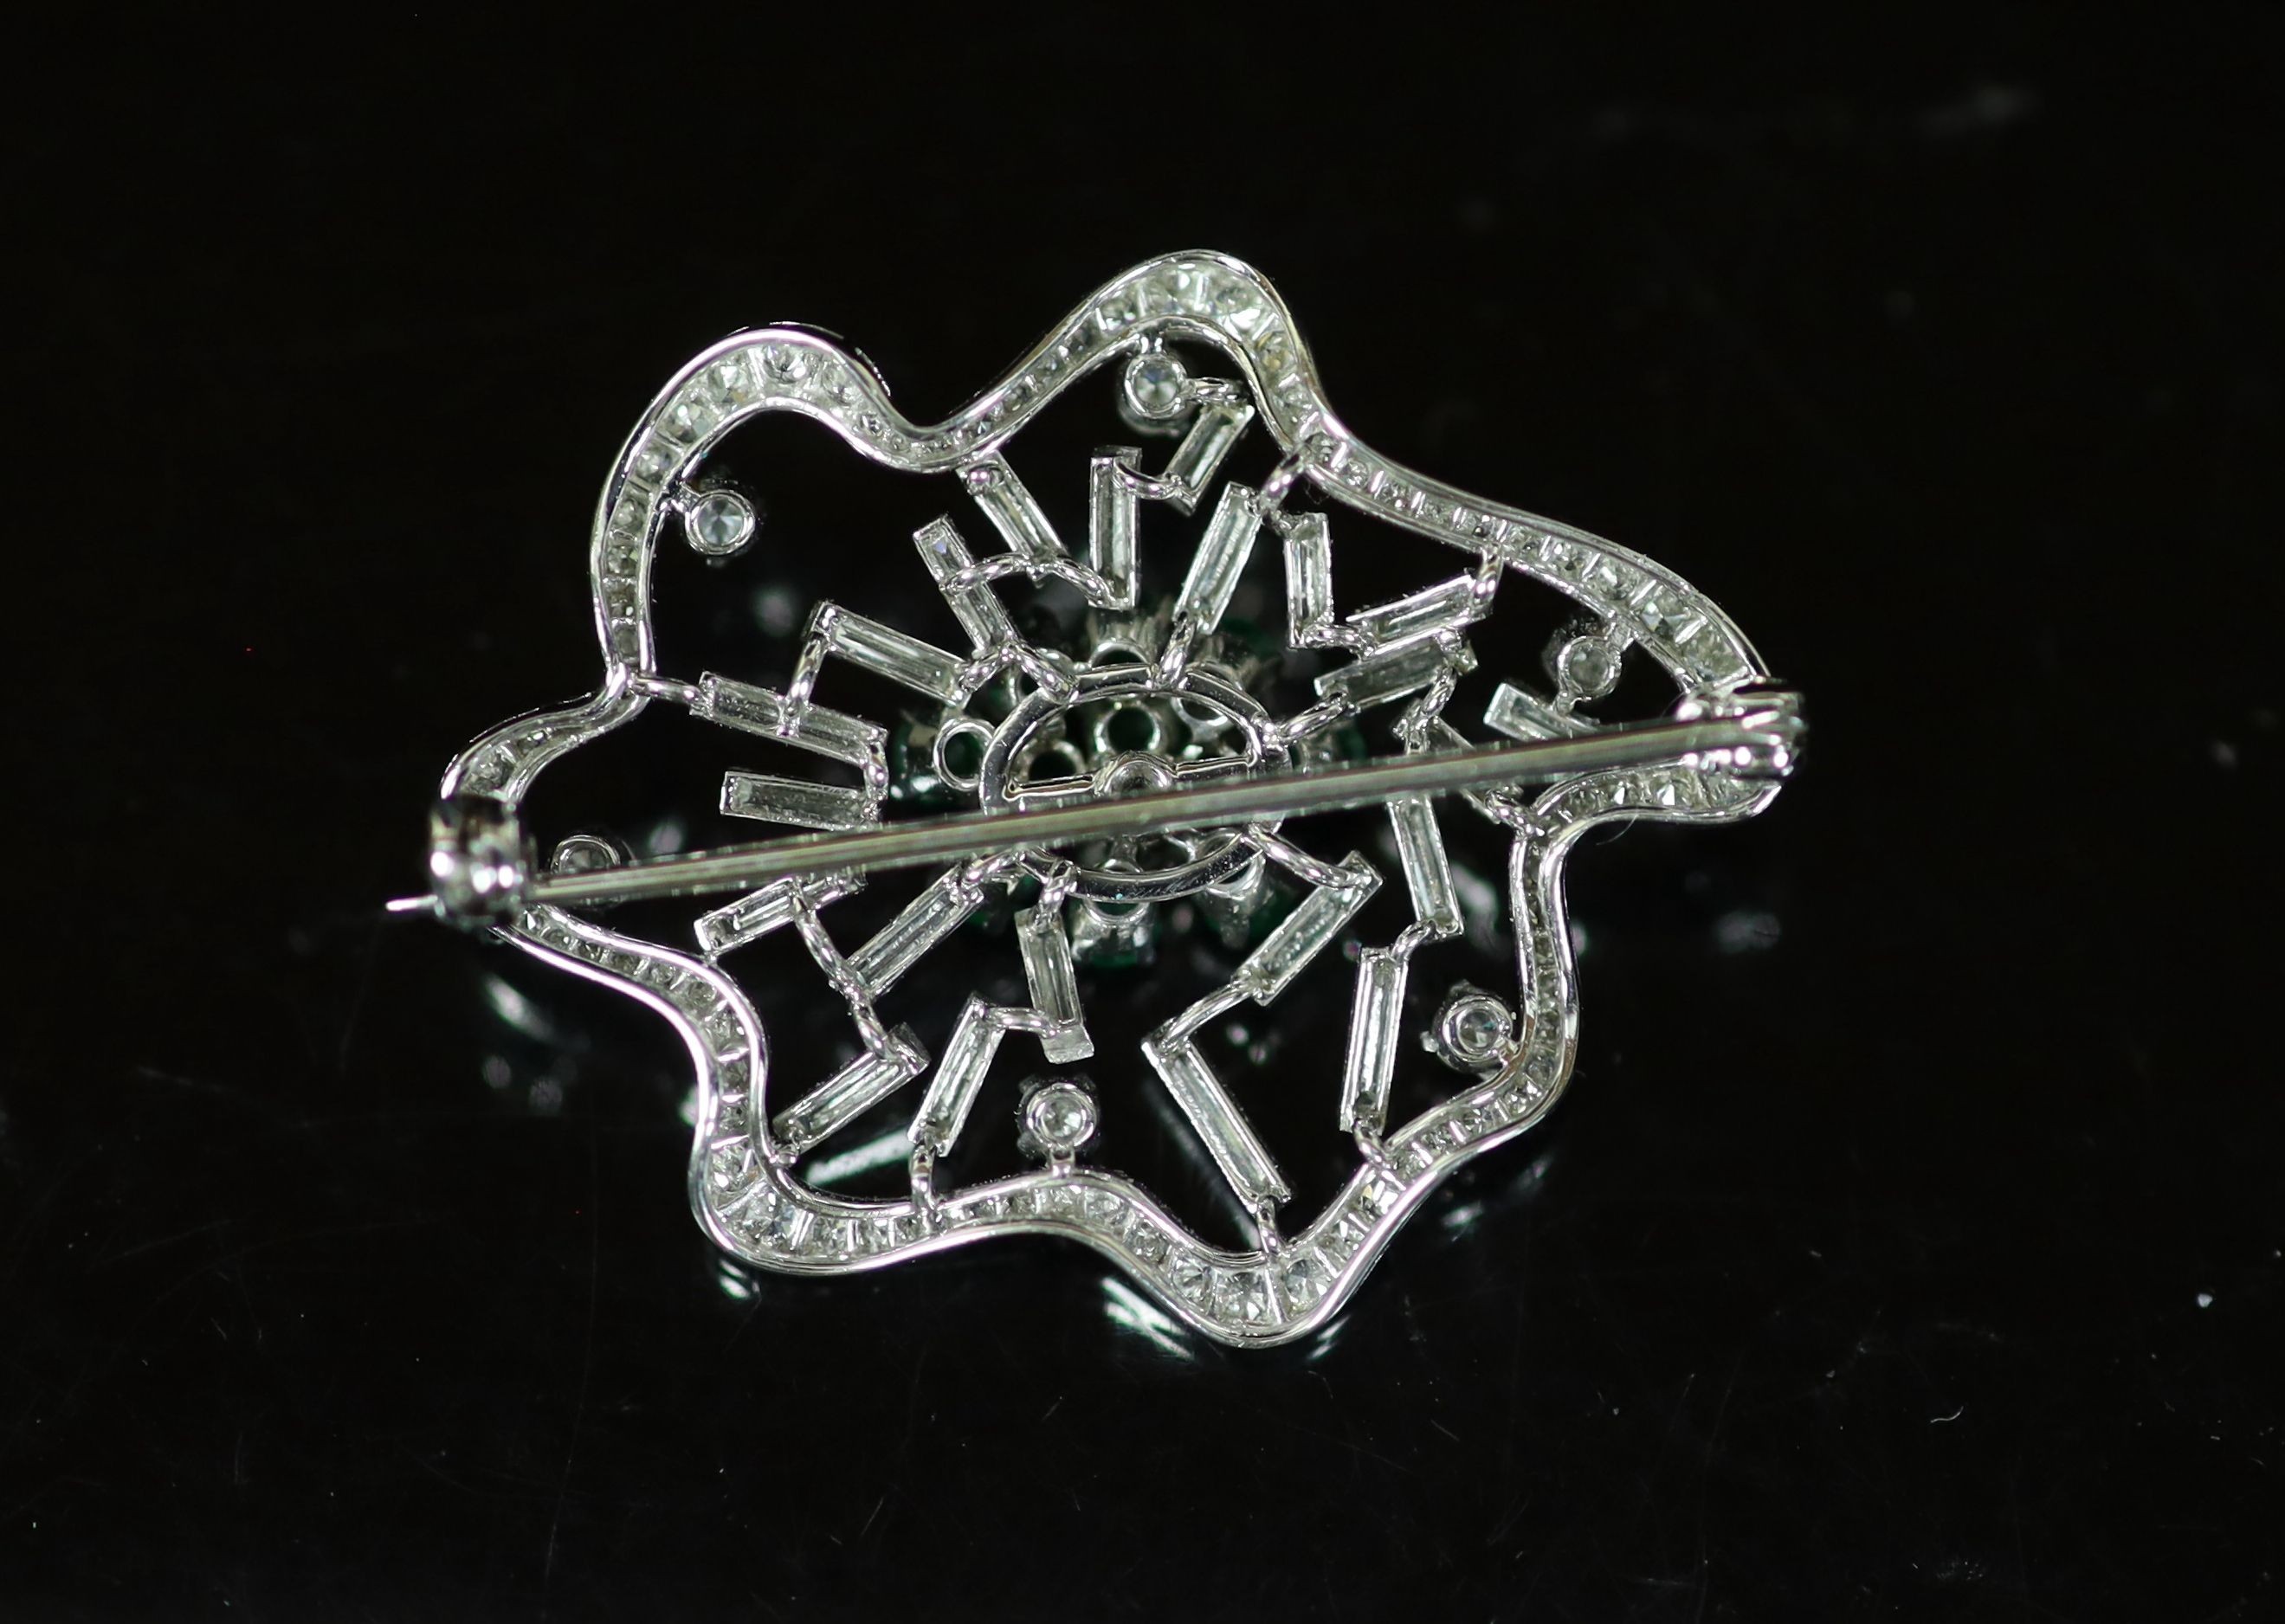 A white gold, emerald and diamond set open work modernist brooch